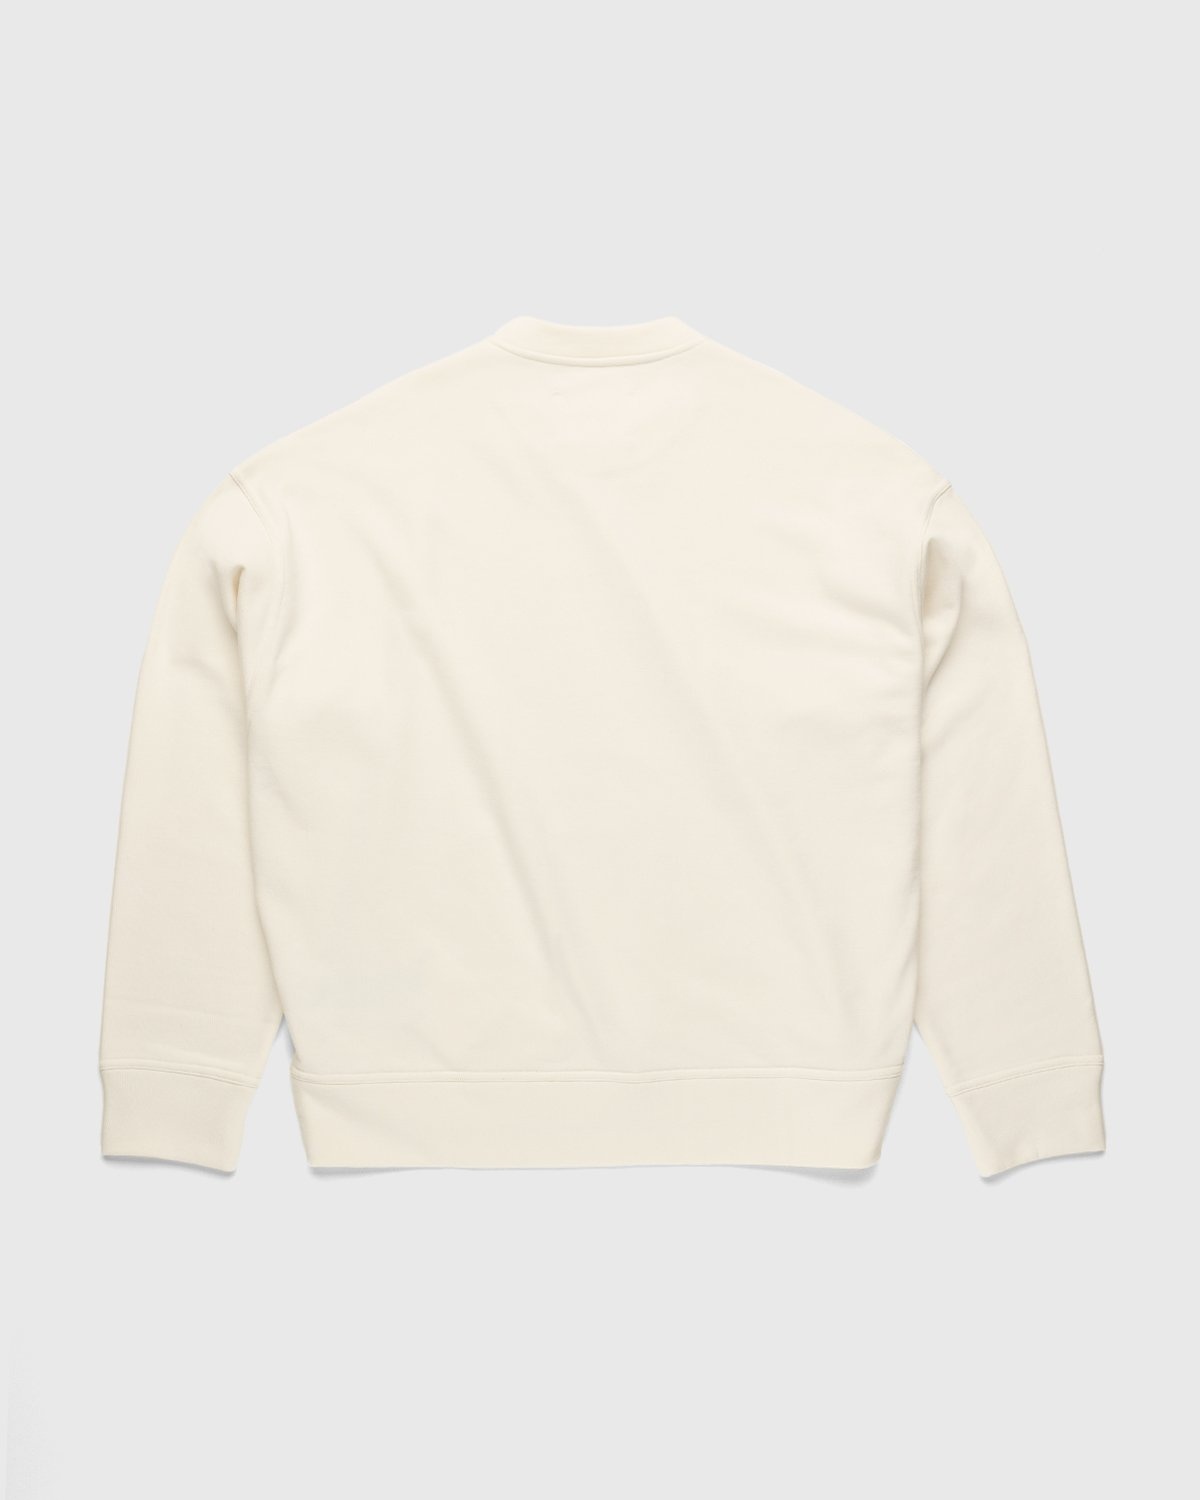 Jil Sander – Logo Sweater Natural - Sweats - Beige - Image 2